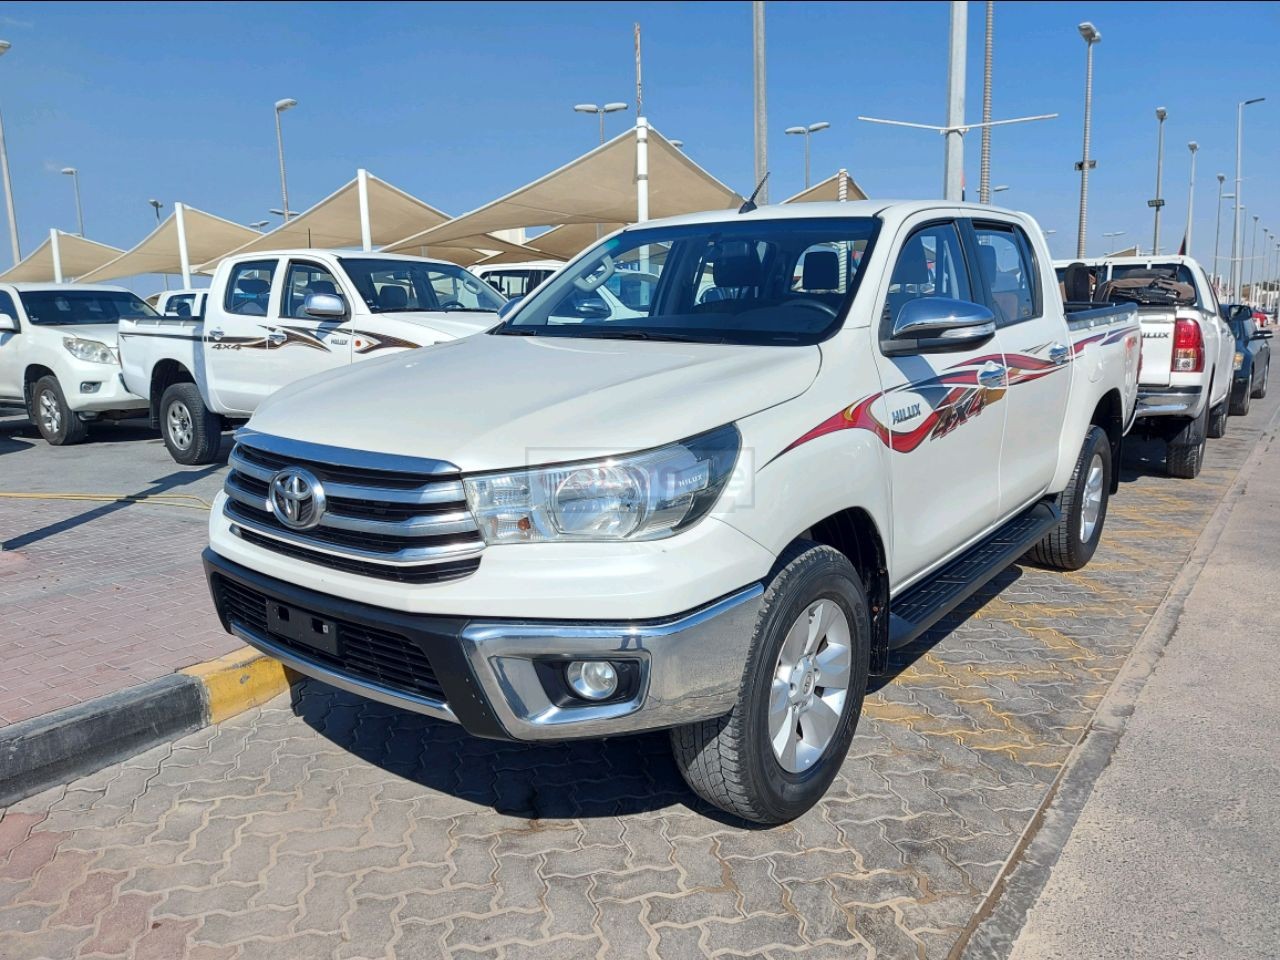 Toyota Hilux 2018 AED 79,000, GCC Spec, Good condition, Negotiable